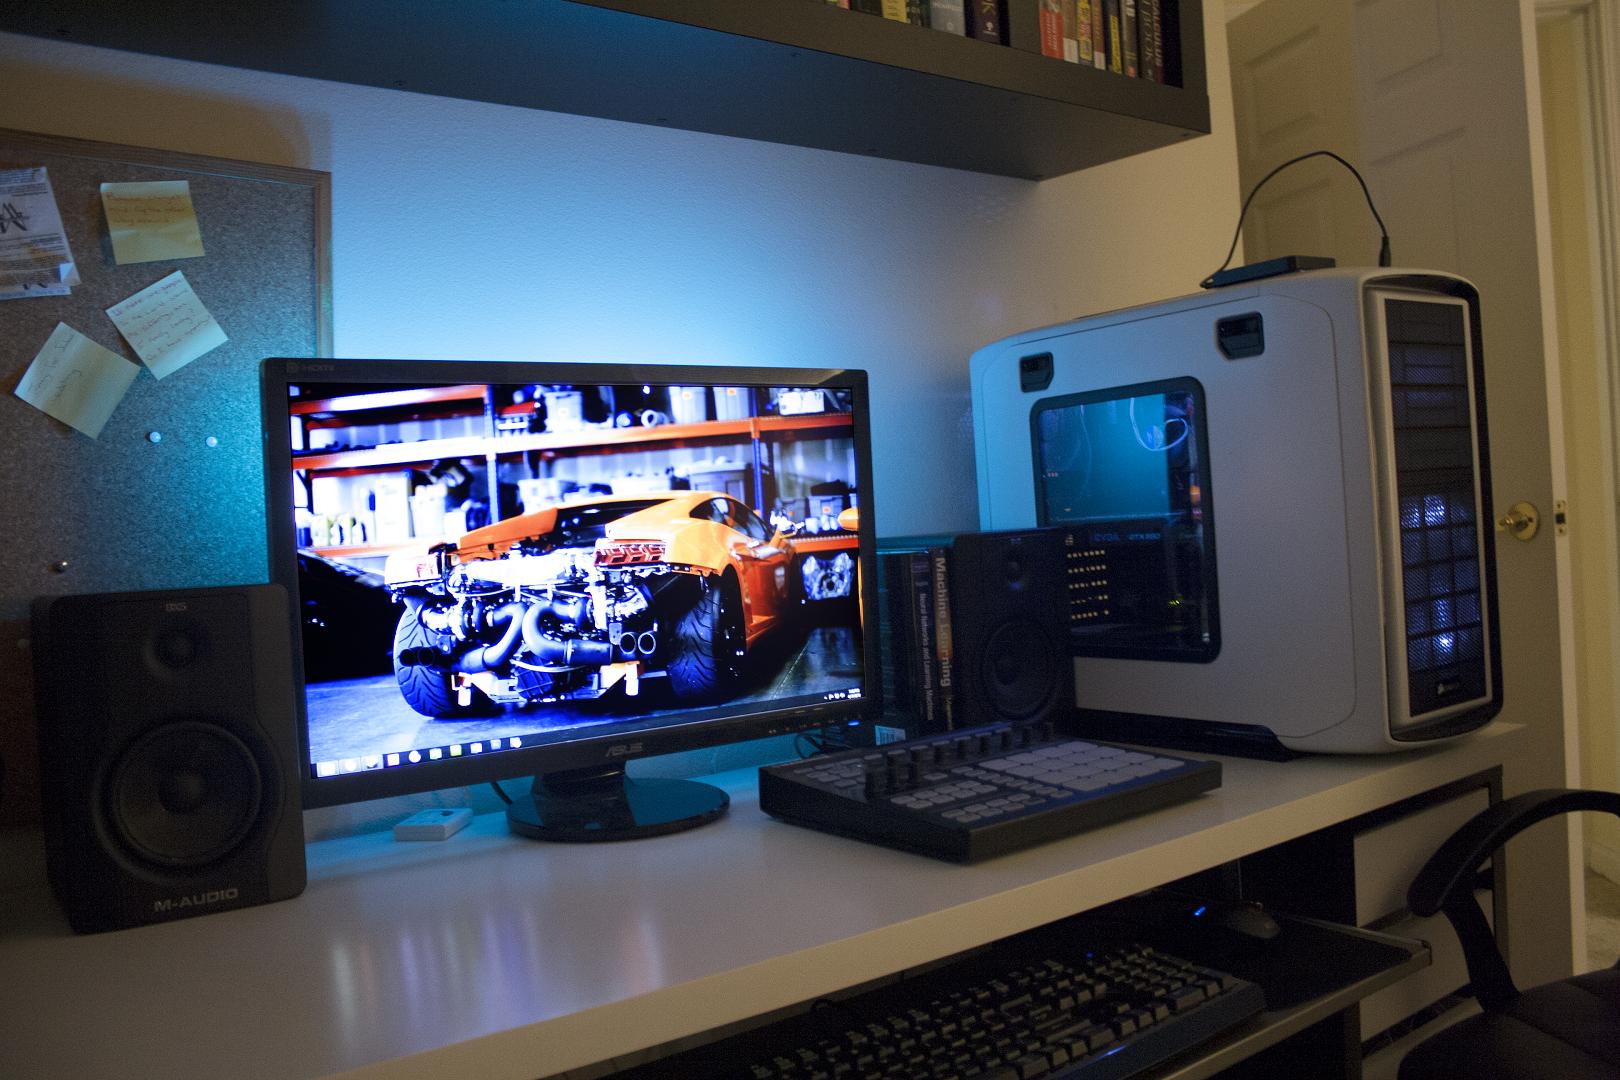 computer set up